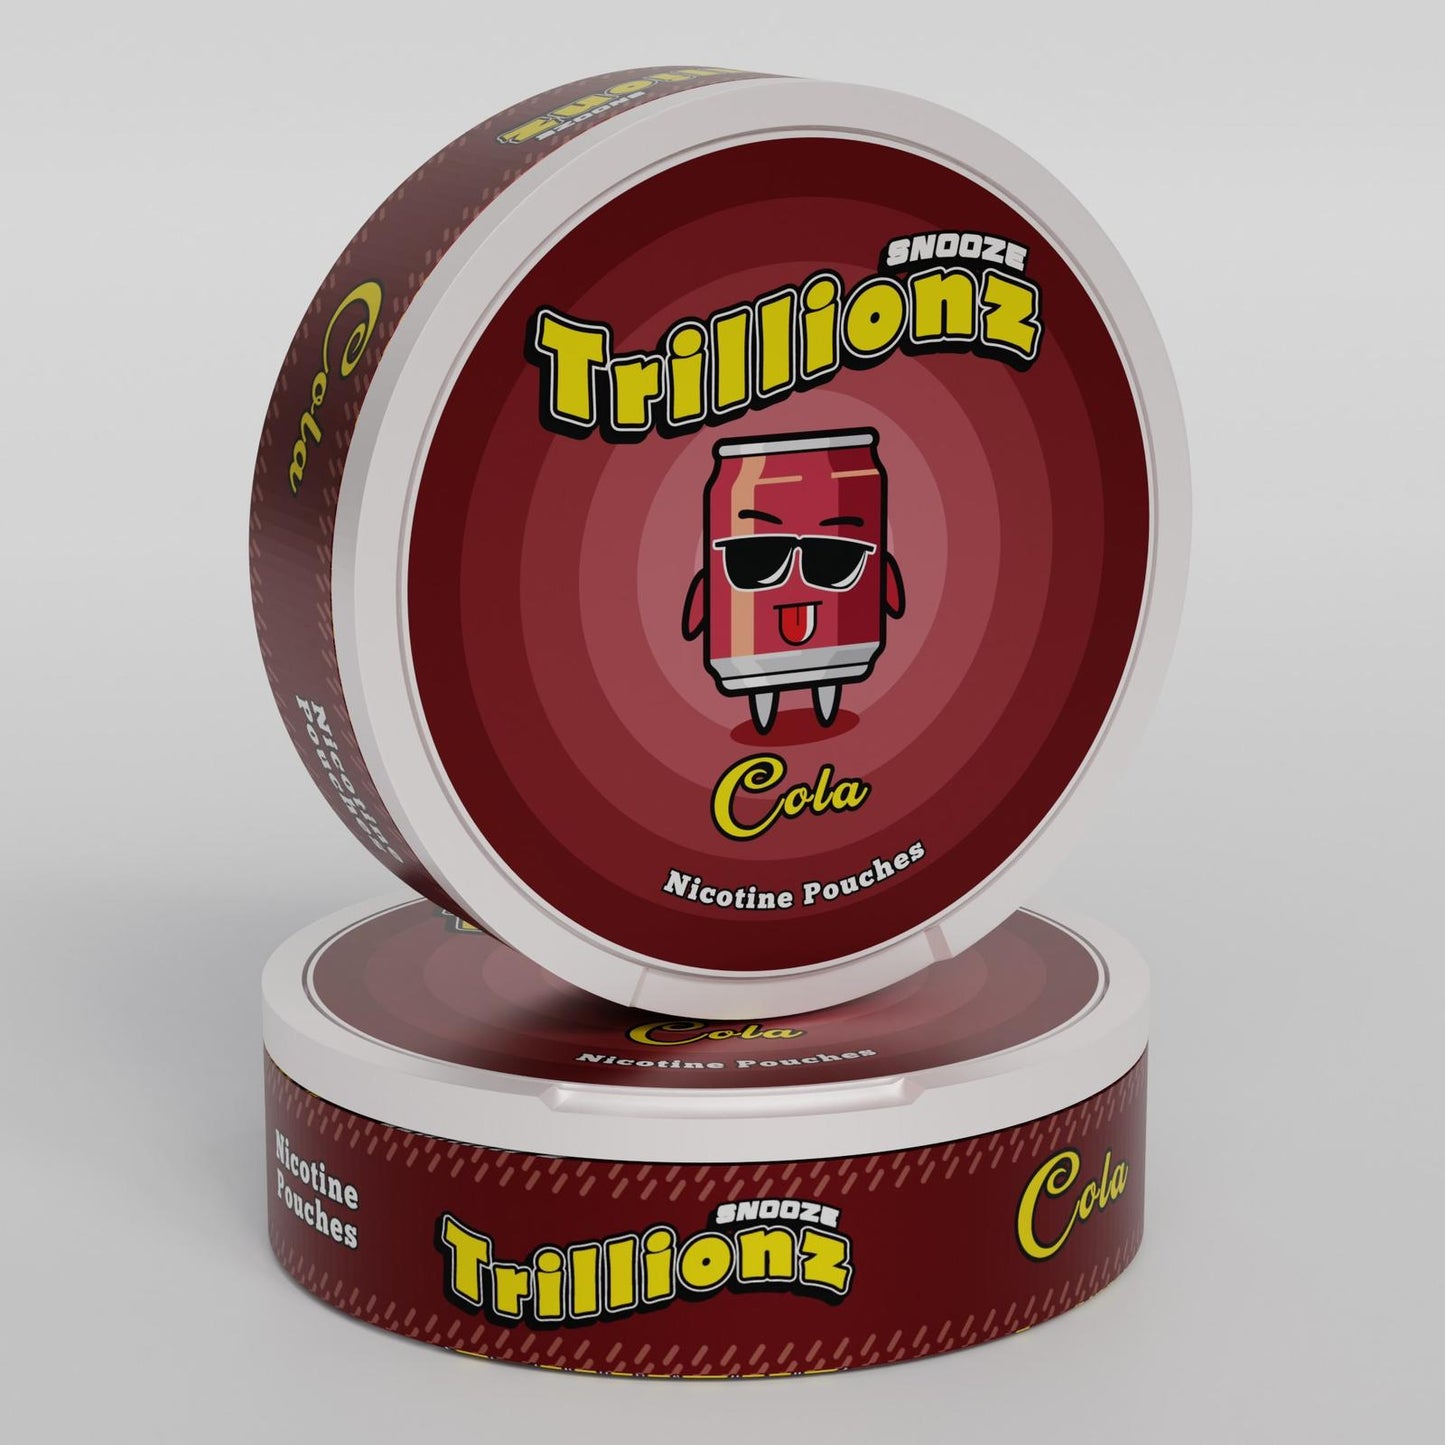 Trillionz Cola 150mg/g Nicotine Pouches